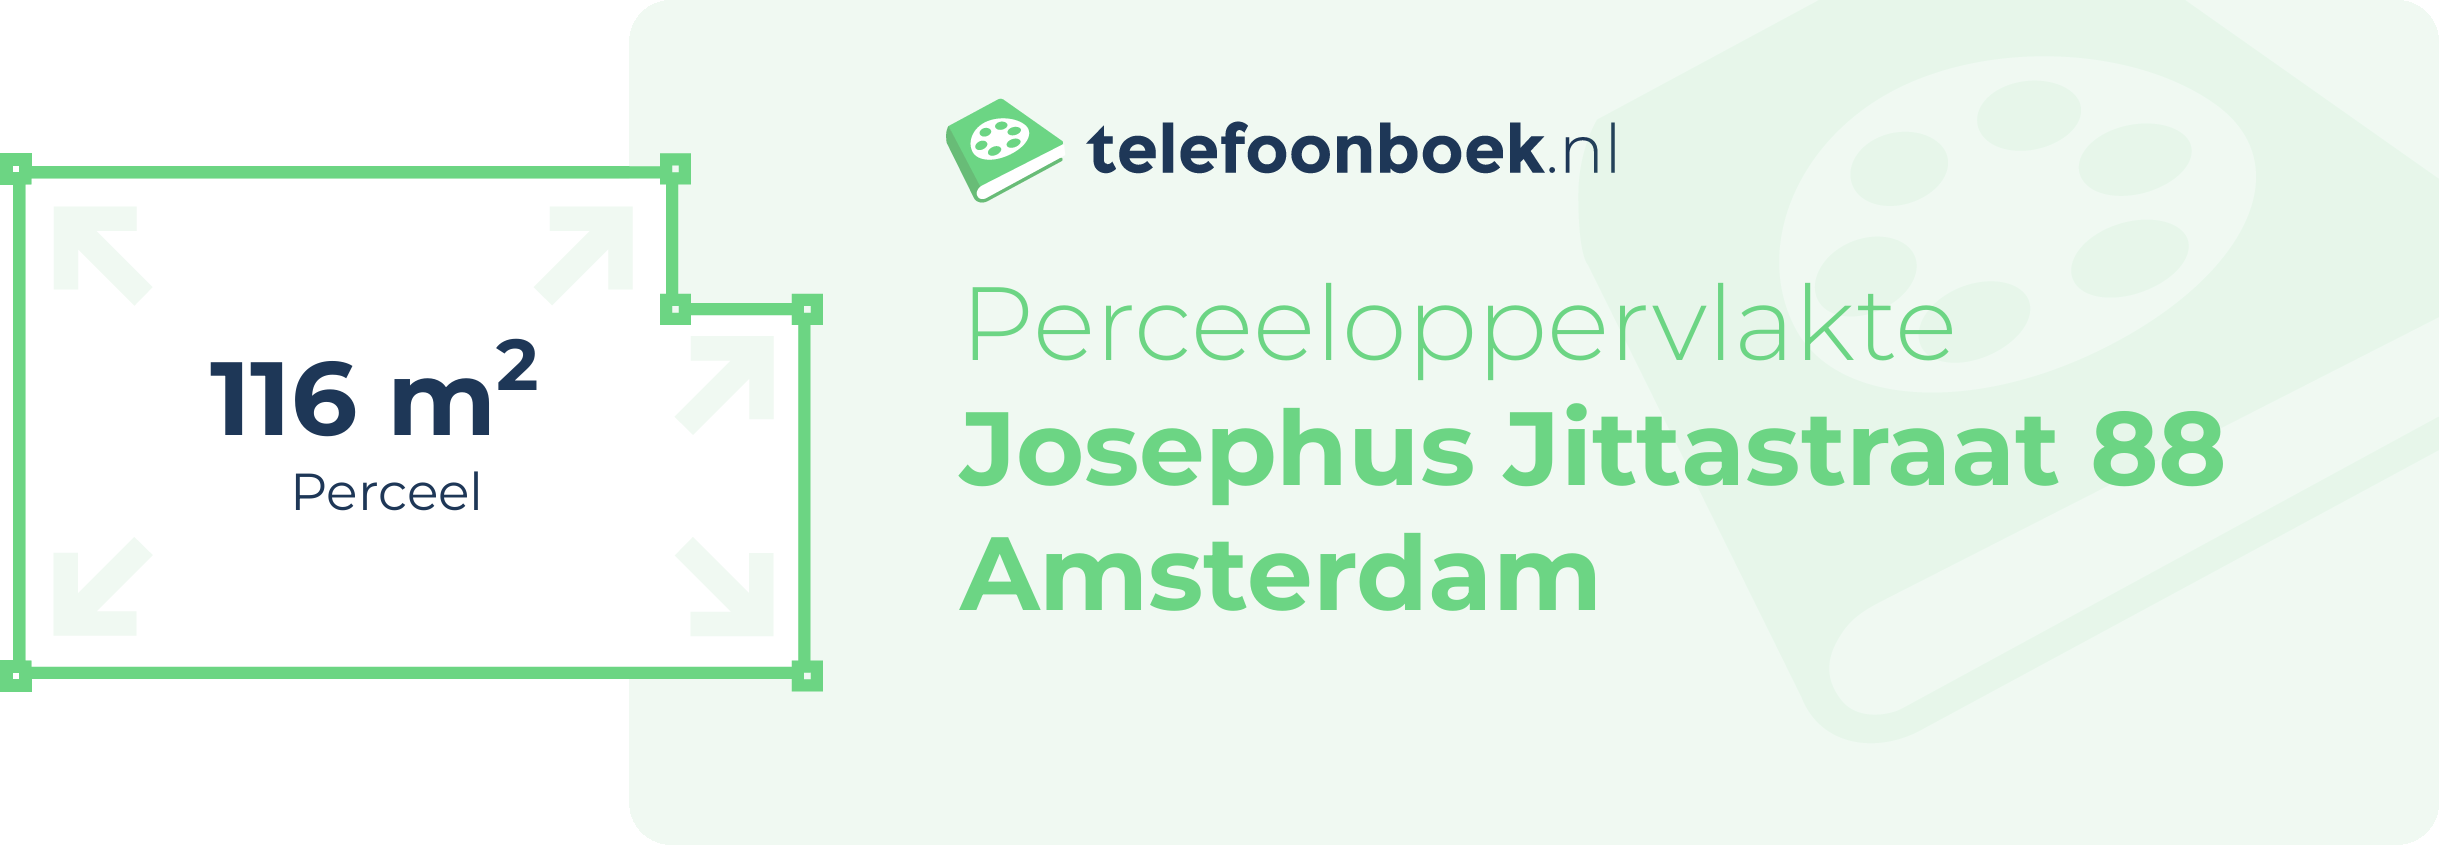 Perceeloppervlakte Josephus Jittastraat 88 Amsterdam